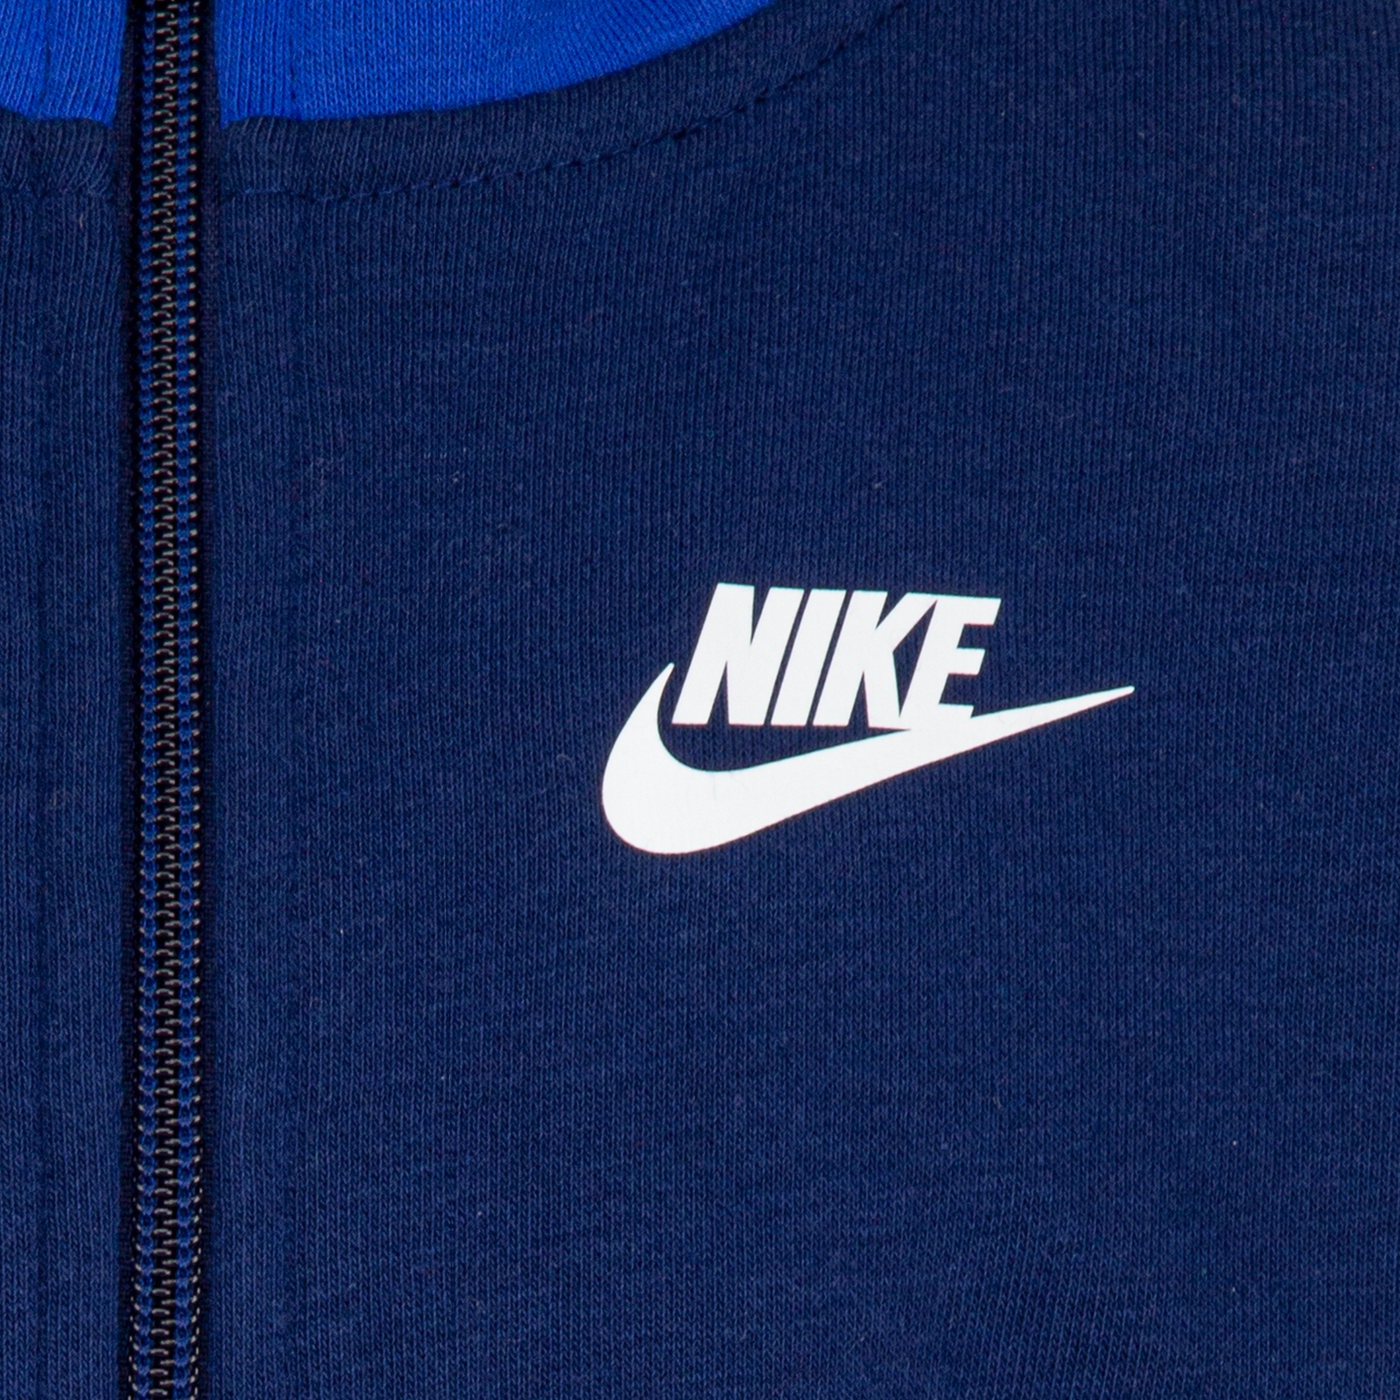 Nike Amplify Coveralls Sweatshirt Nike   